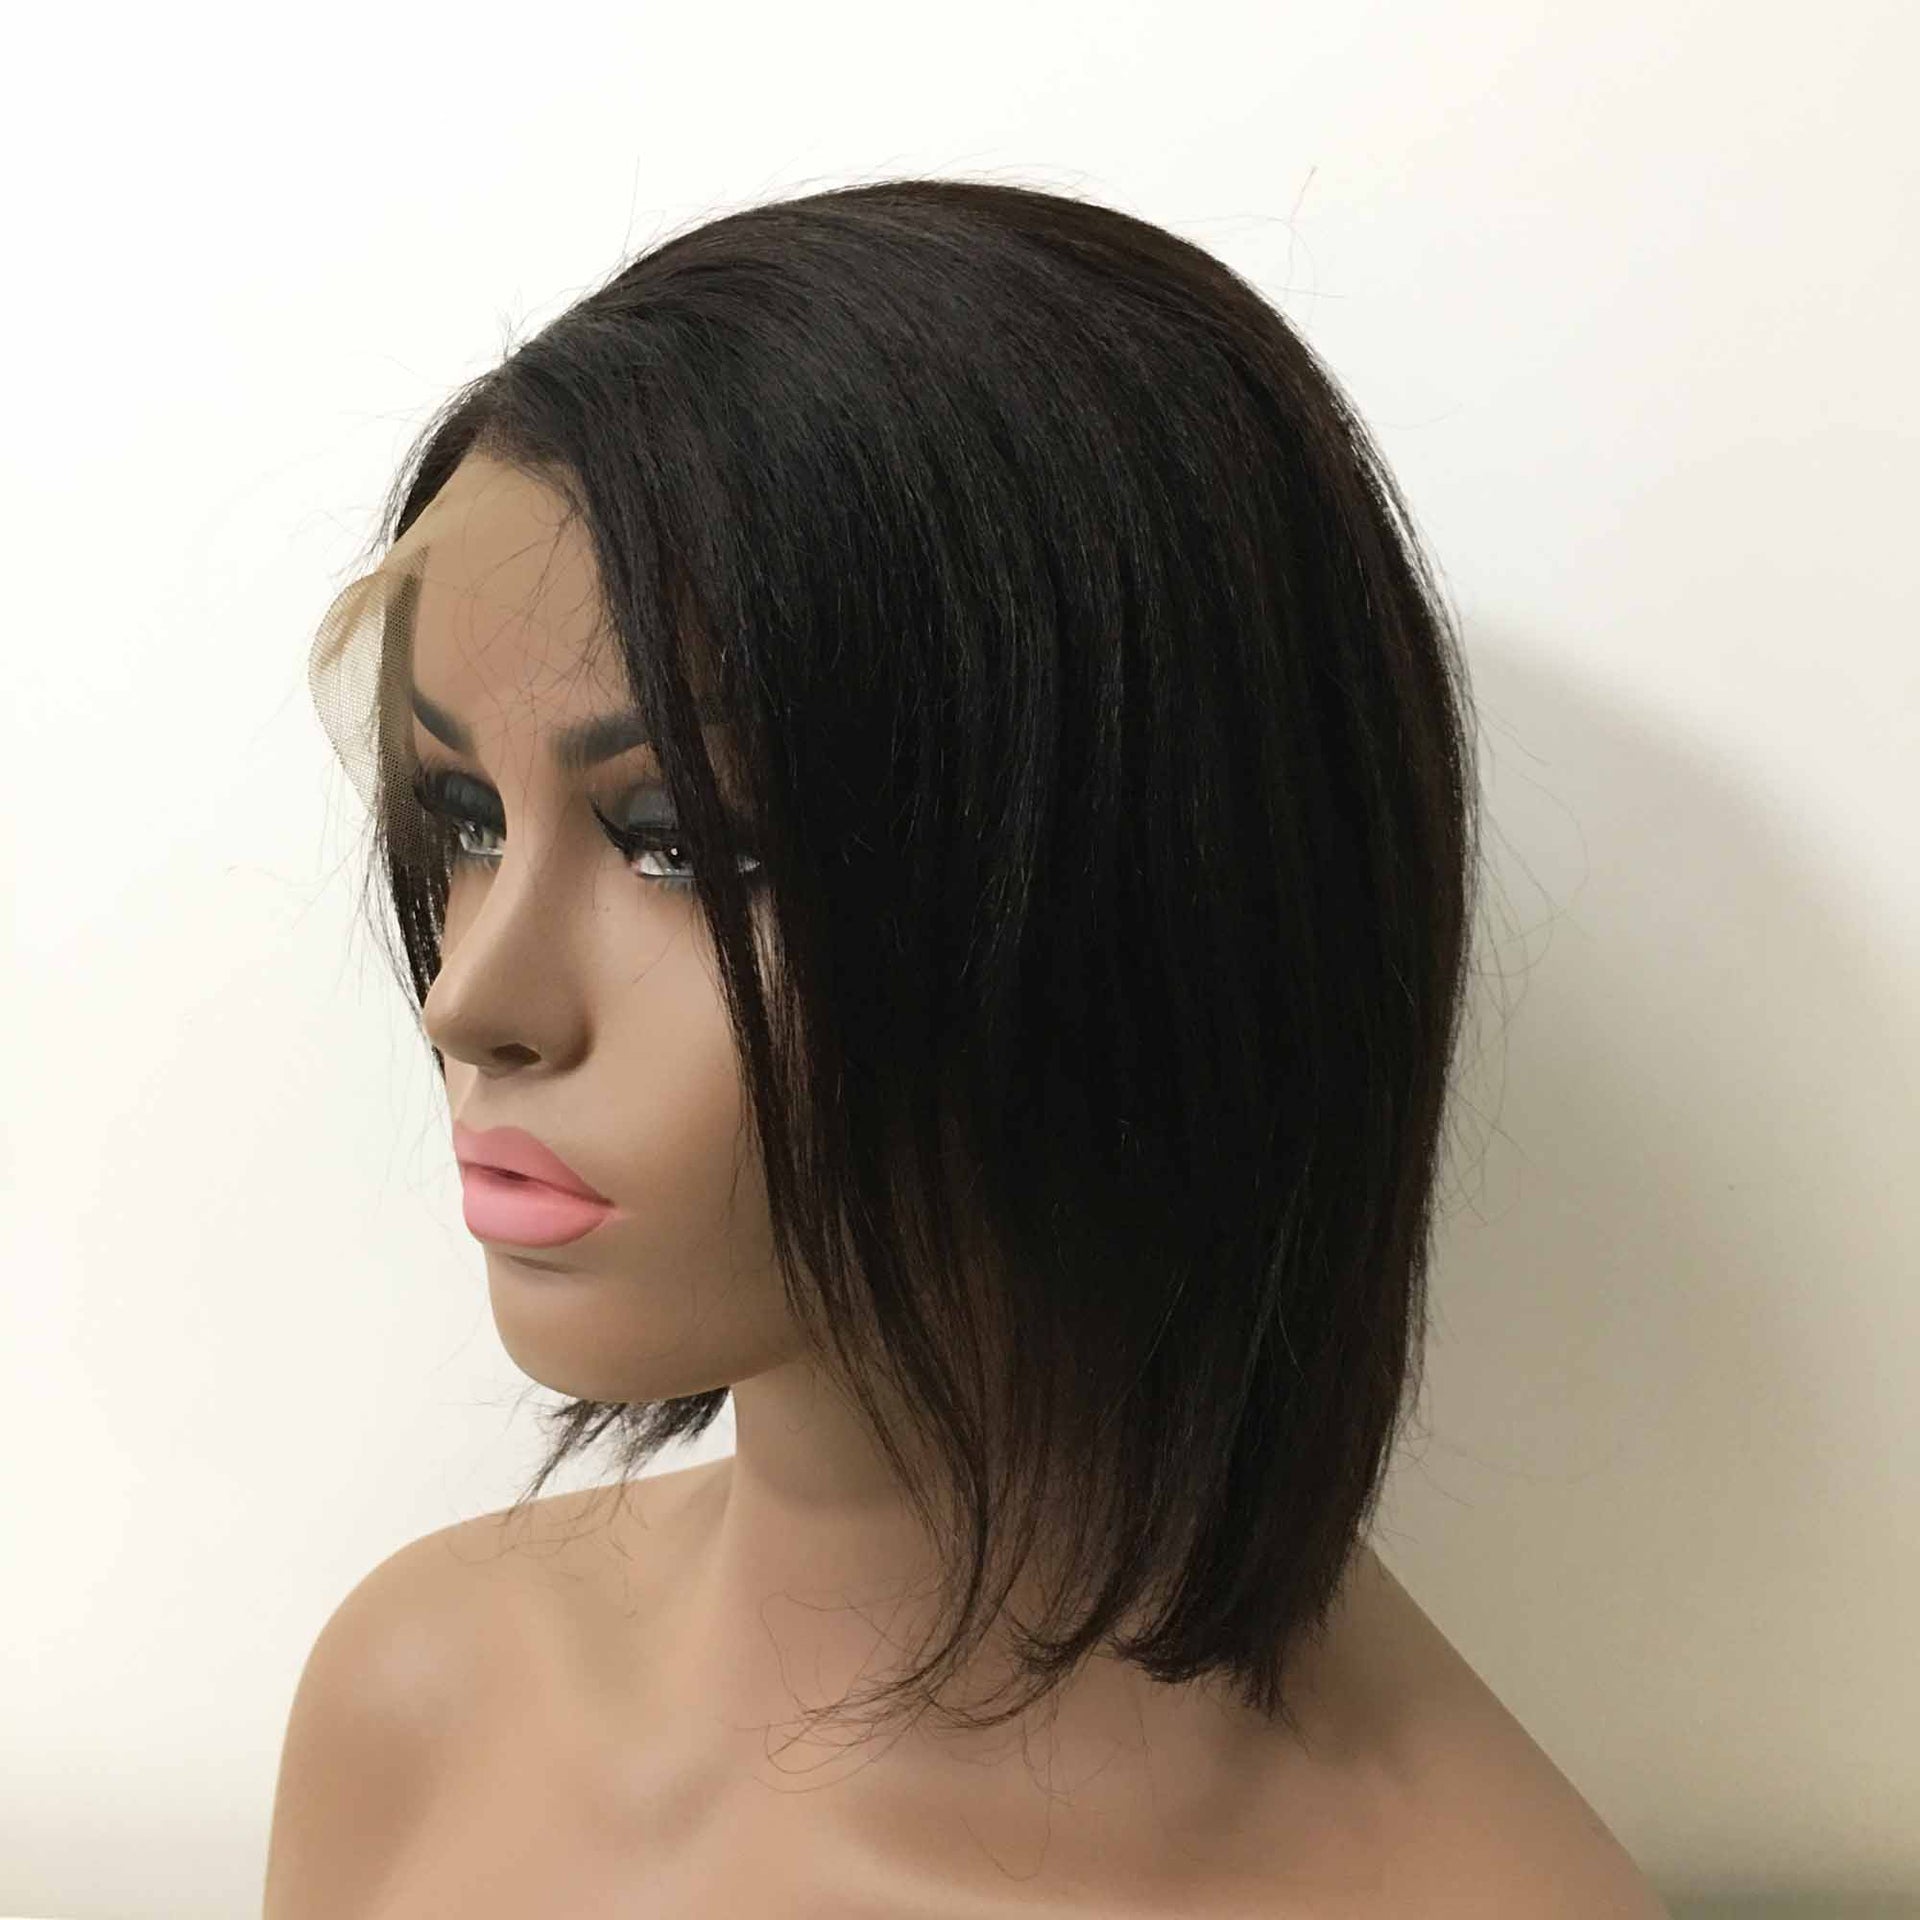 nevermindyrhead Women Natural Black Human Hair Yaki Texture Short Straight Side Part Wig